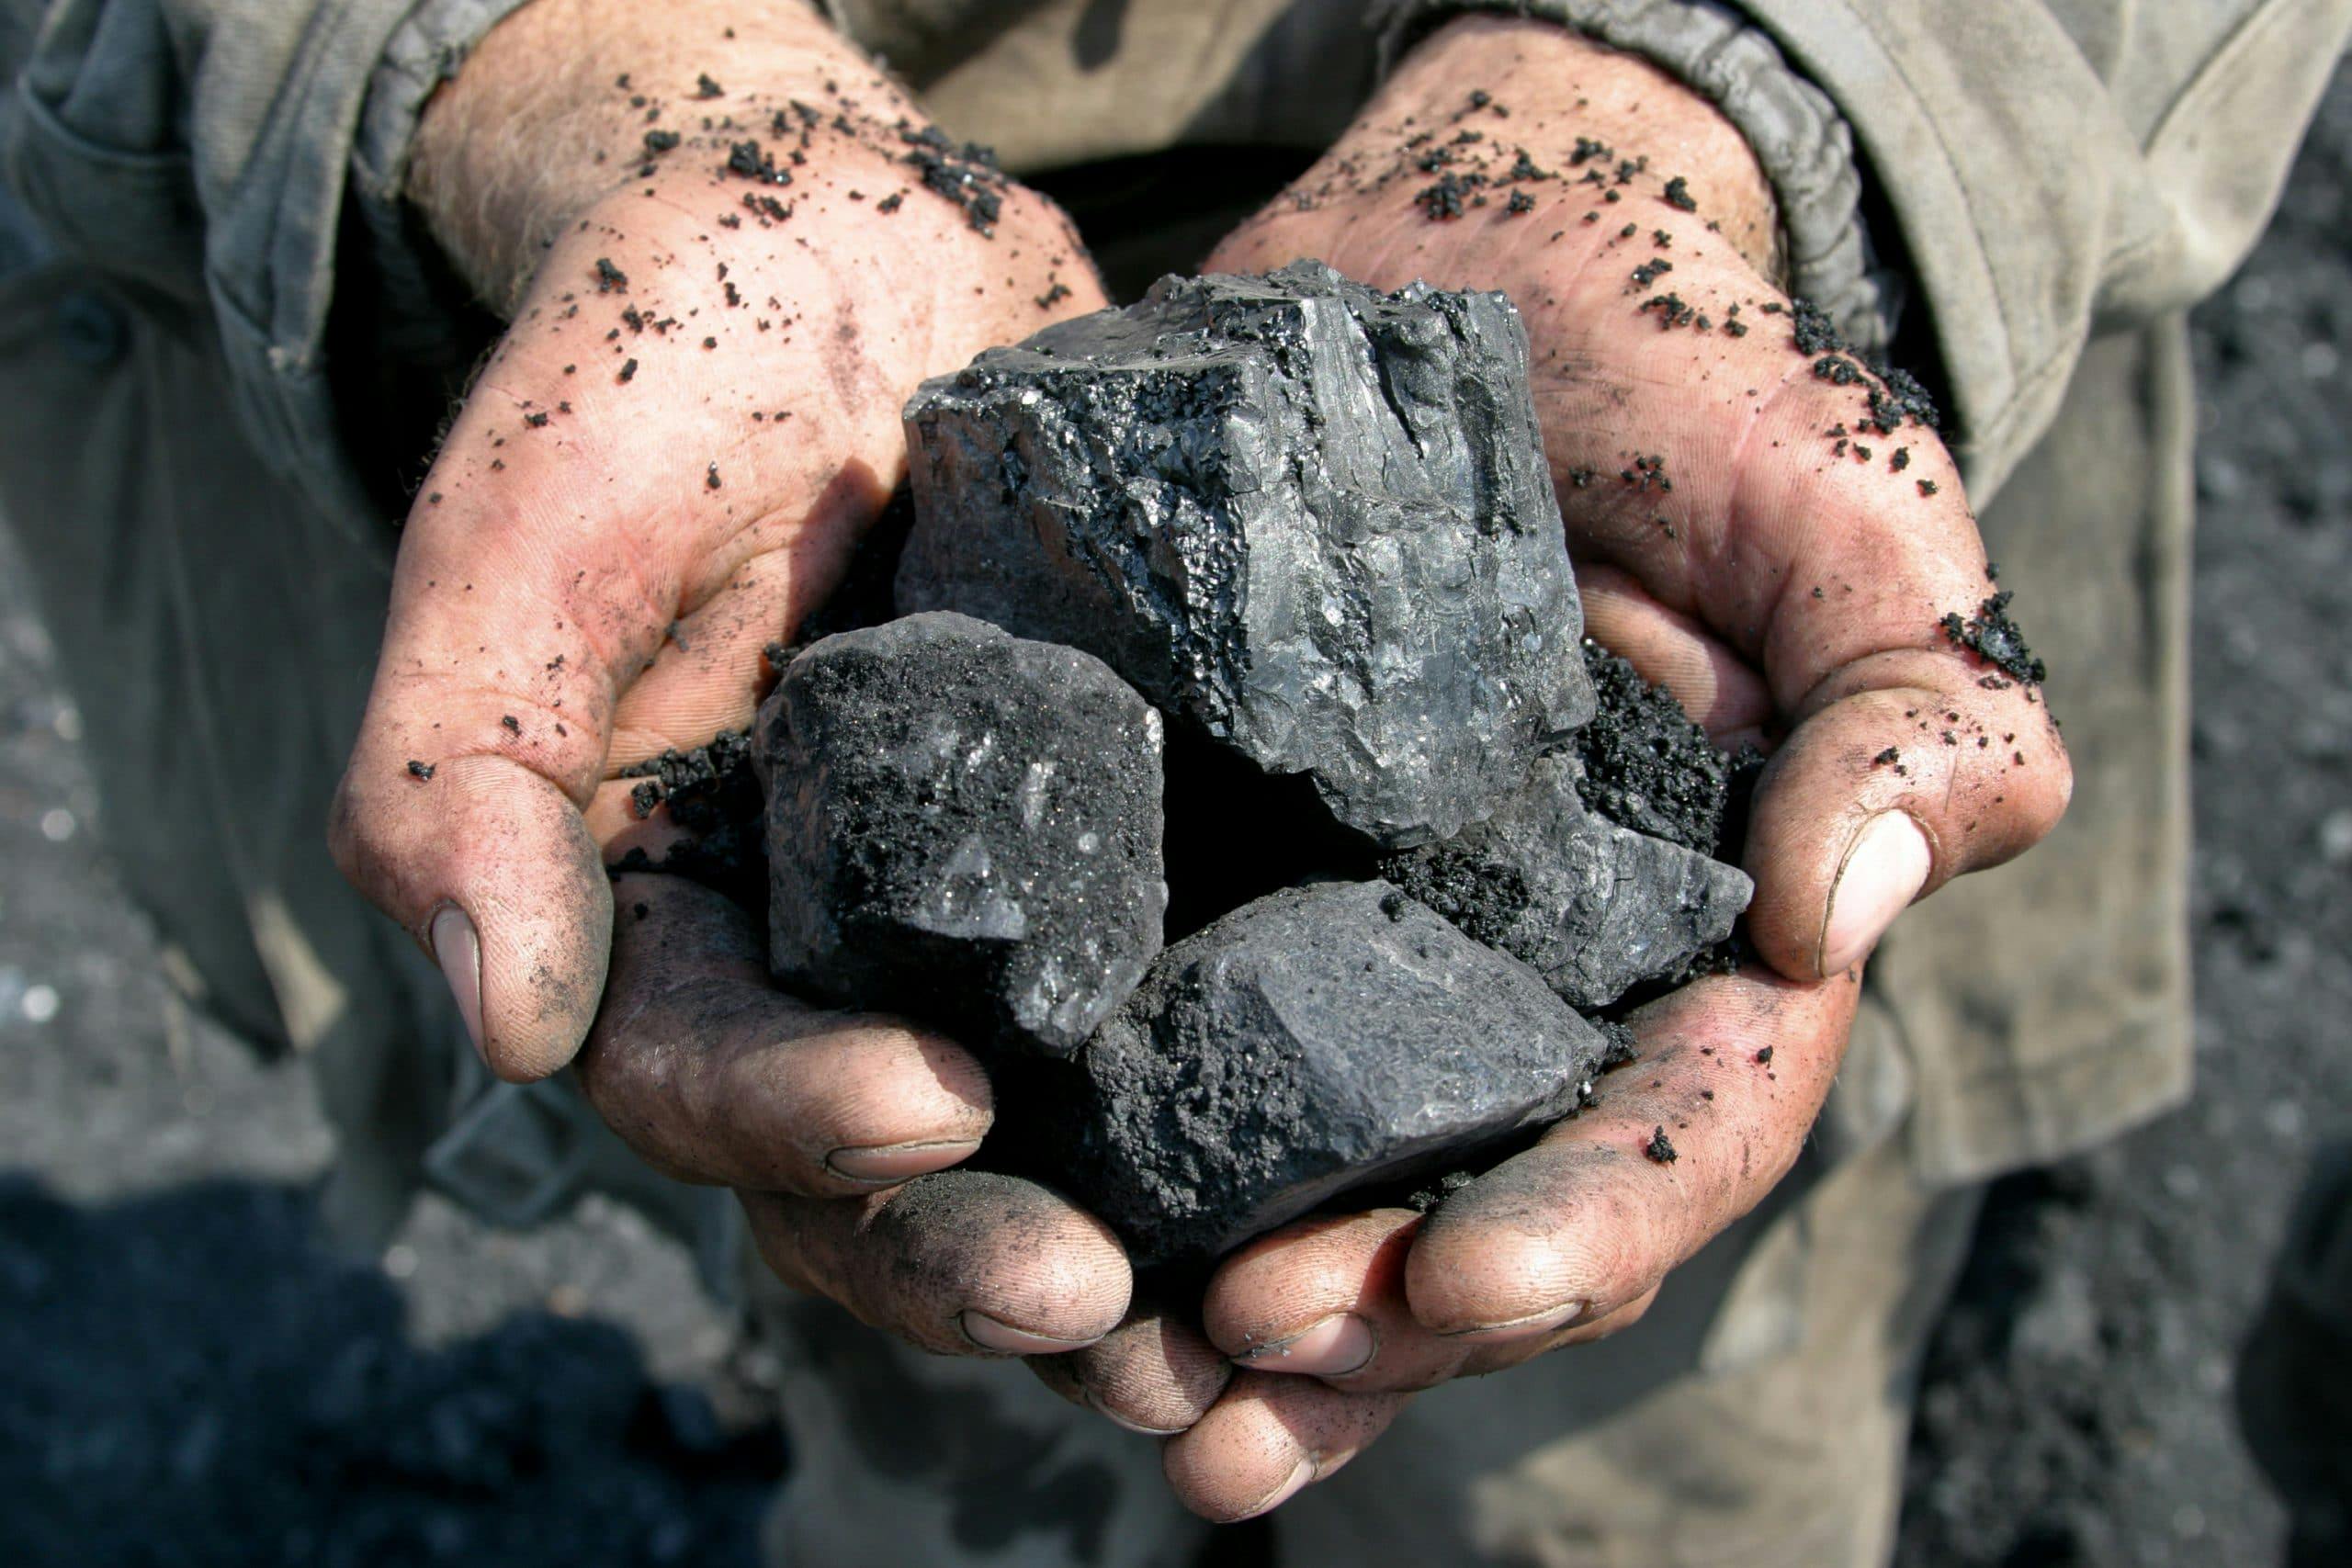 Data Brings Hope to Kentucky Coal Mining Country